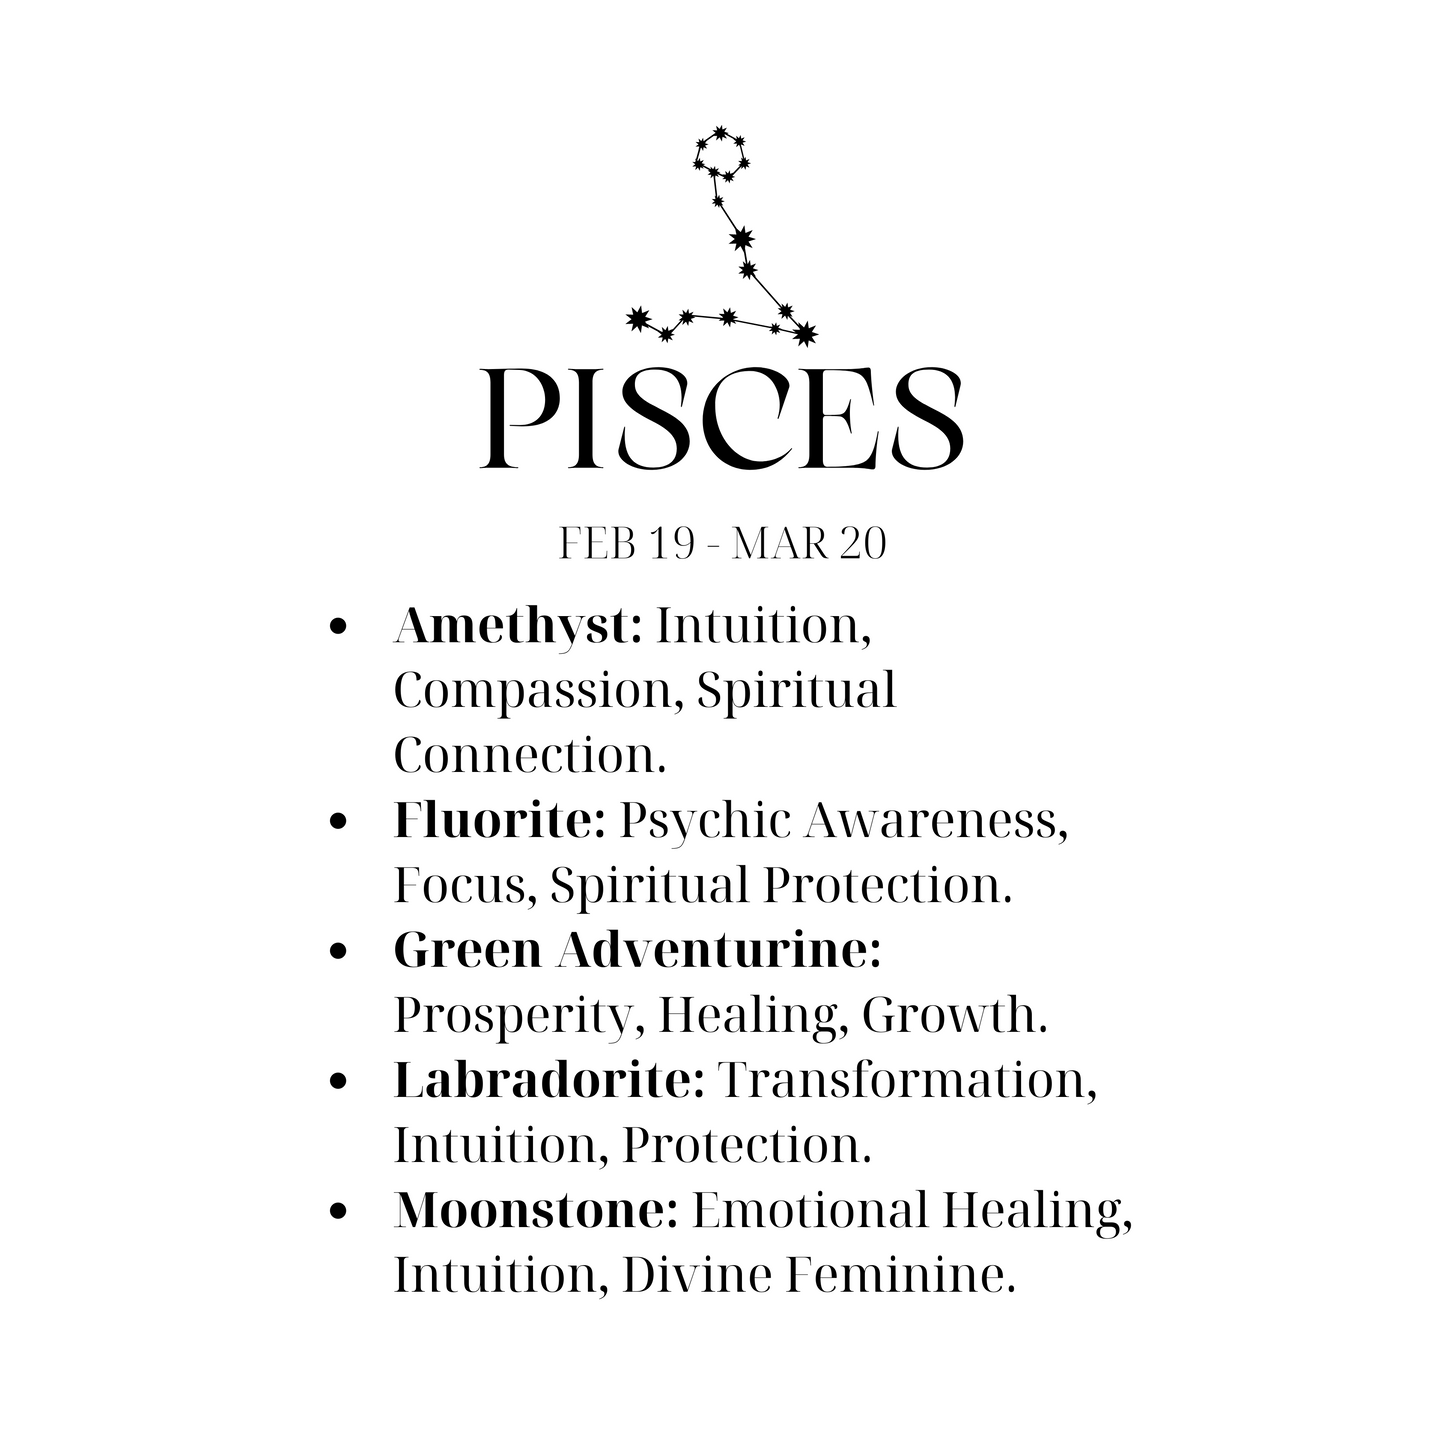 Pisces Crystal Kit